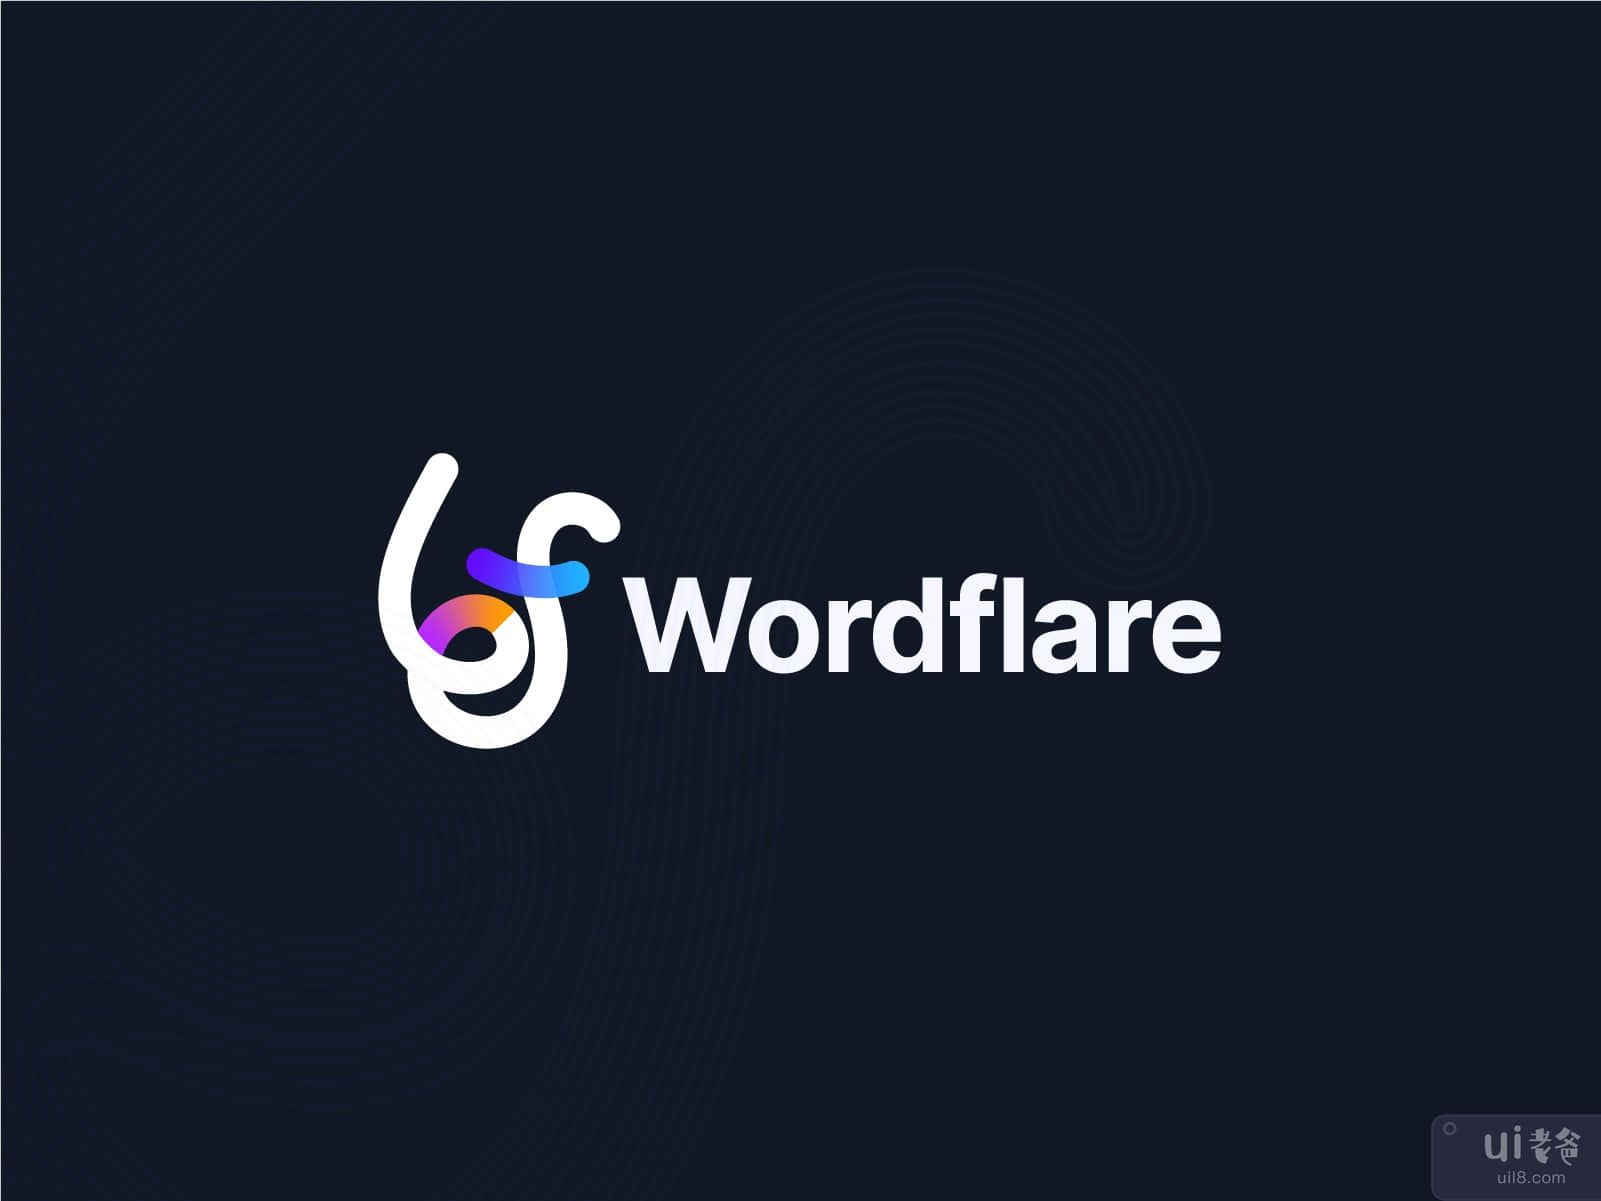 Wordflare - 内容写作 - 技术标志 - 人工智能机器标志(Wordflare - Content Writing - Tech Logo - AI Machine Logo)插图1